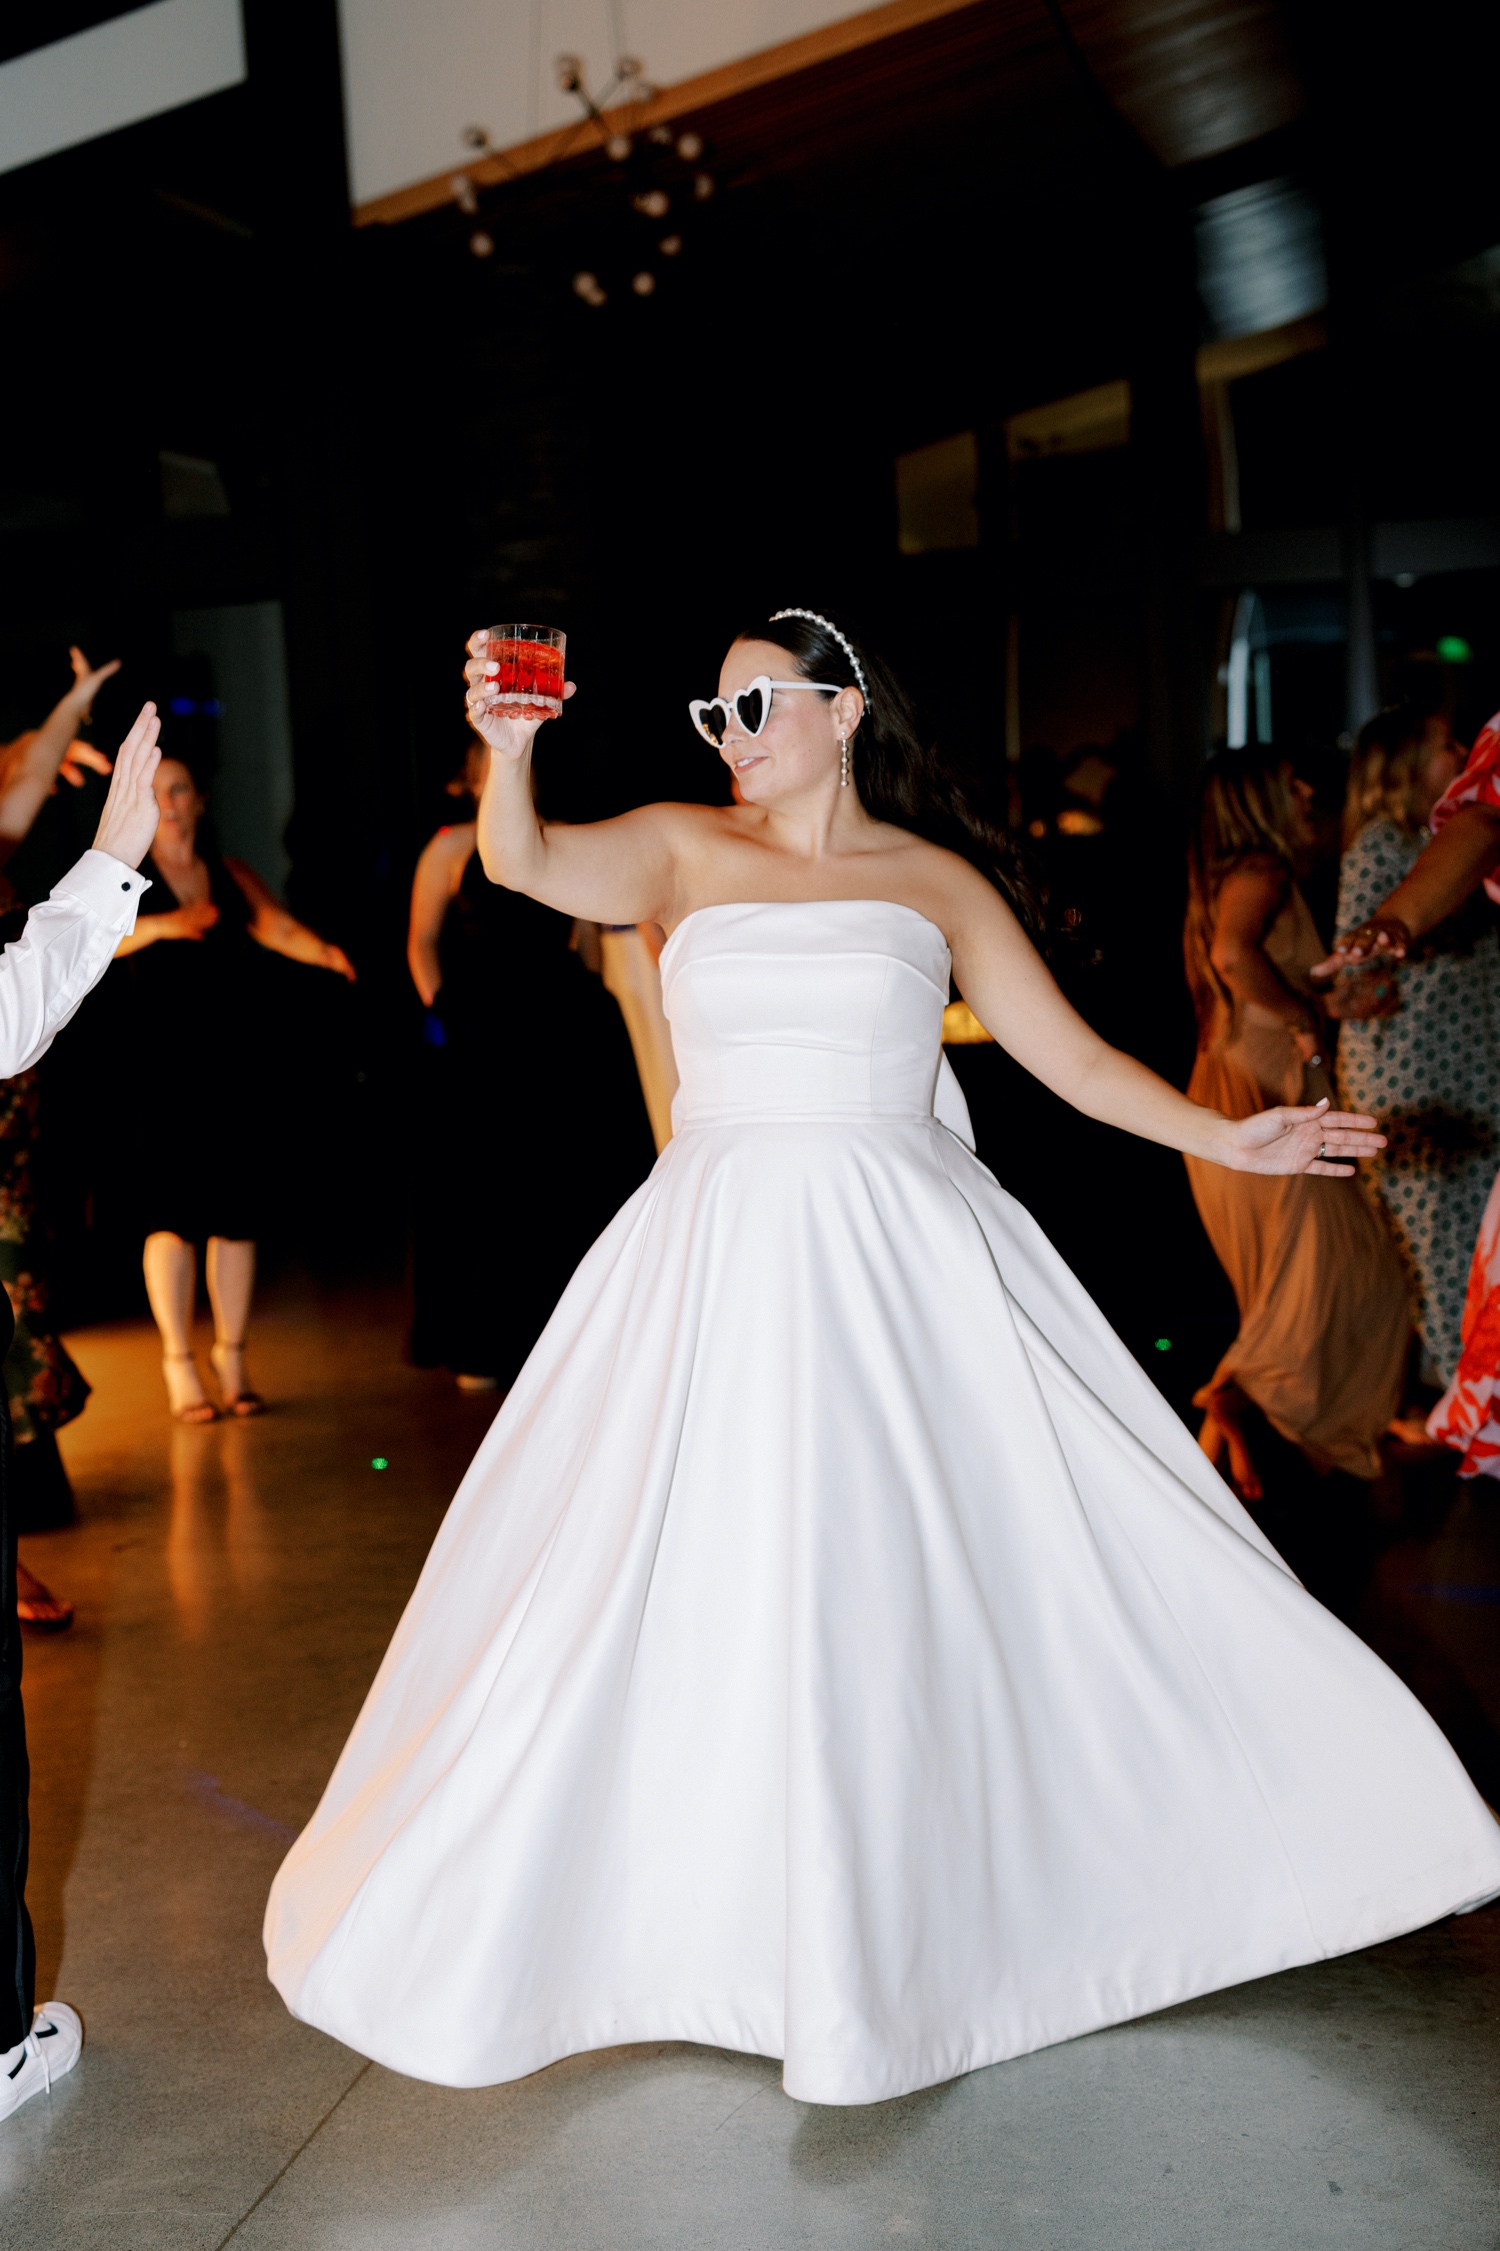 Wedding reception dancing at Amaterra Winery 